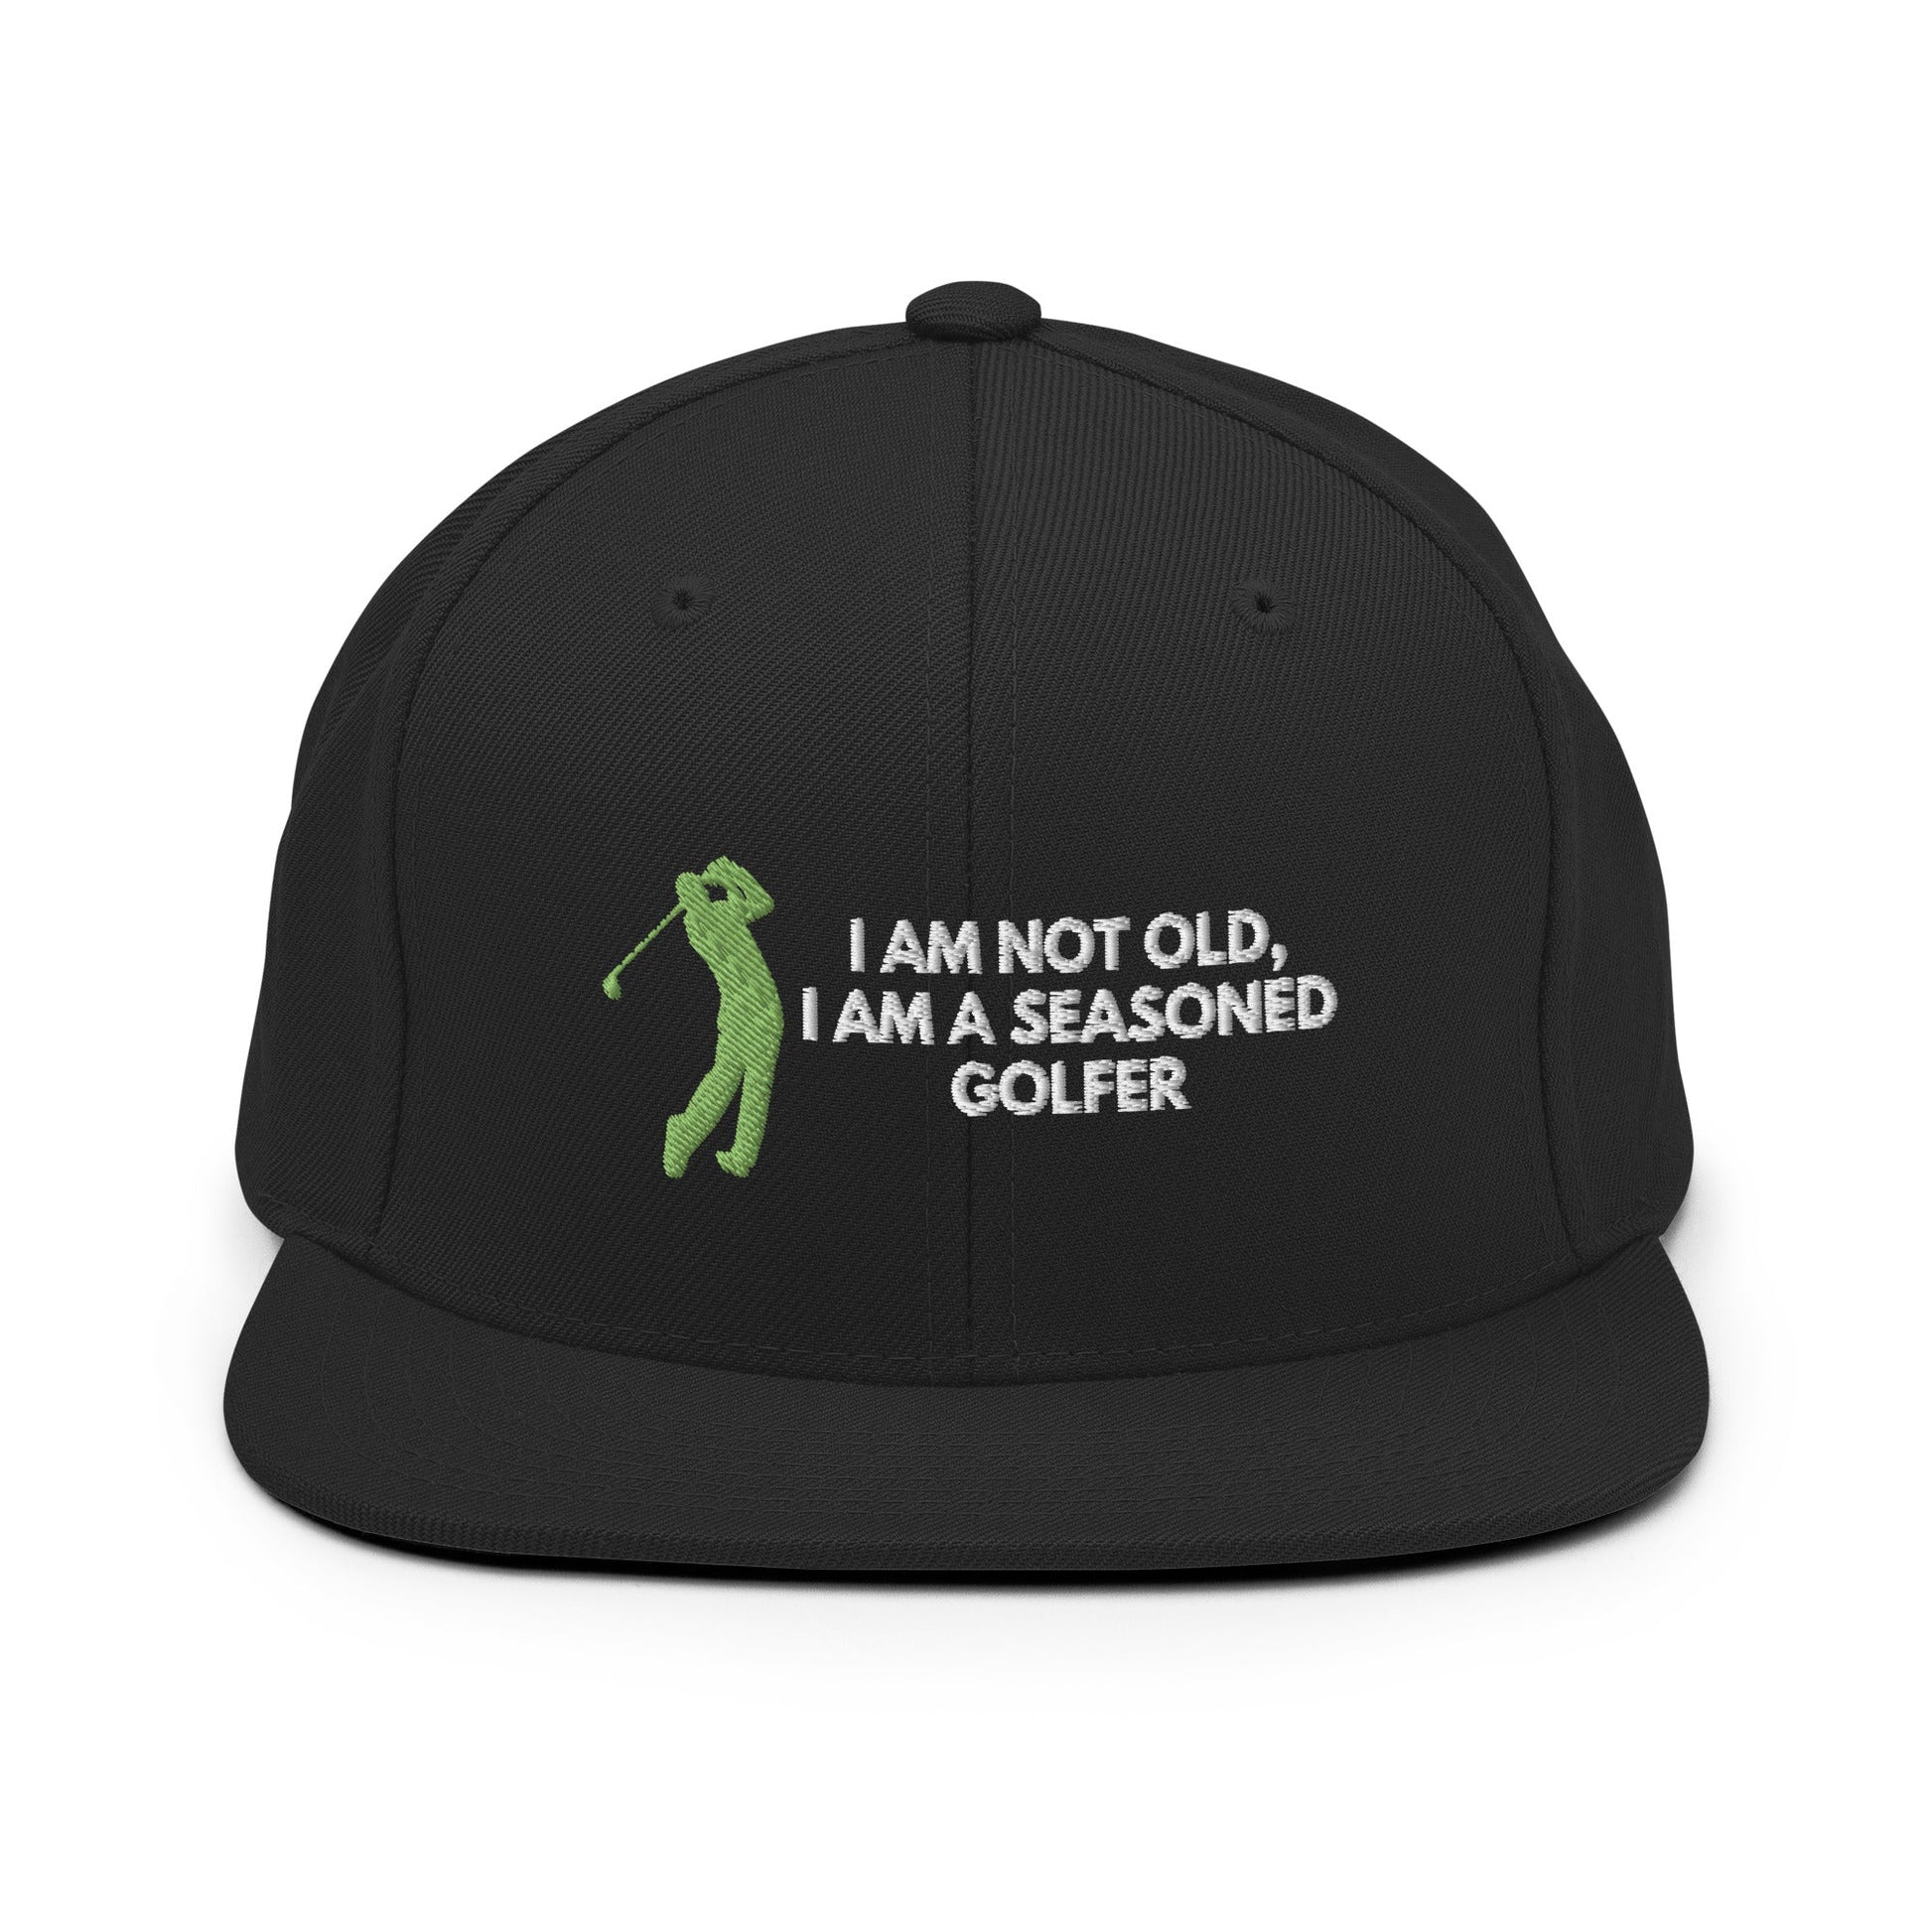 Funny Golfer Gifts  Snapback Hat Black Im Not Old I Am A Seasoned Golfer Hat Snapback Hat